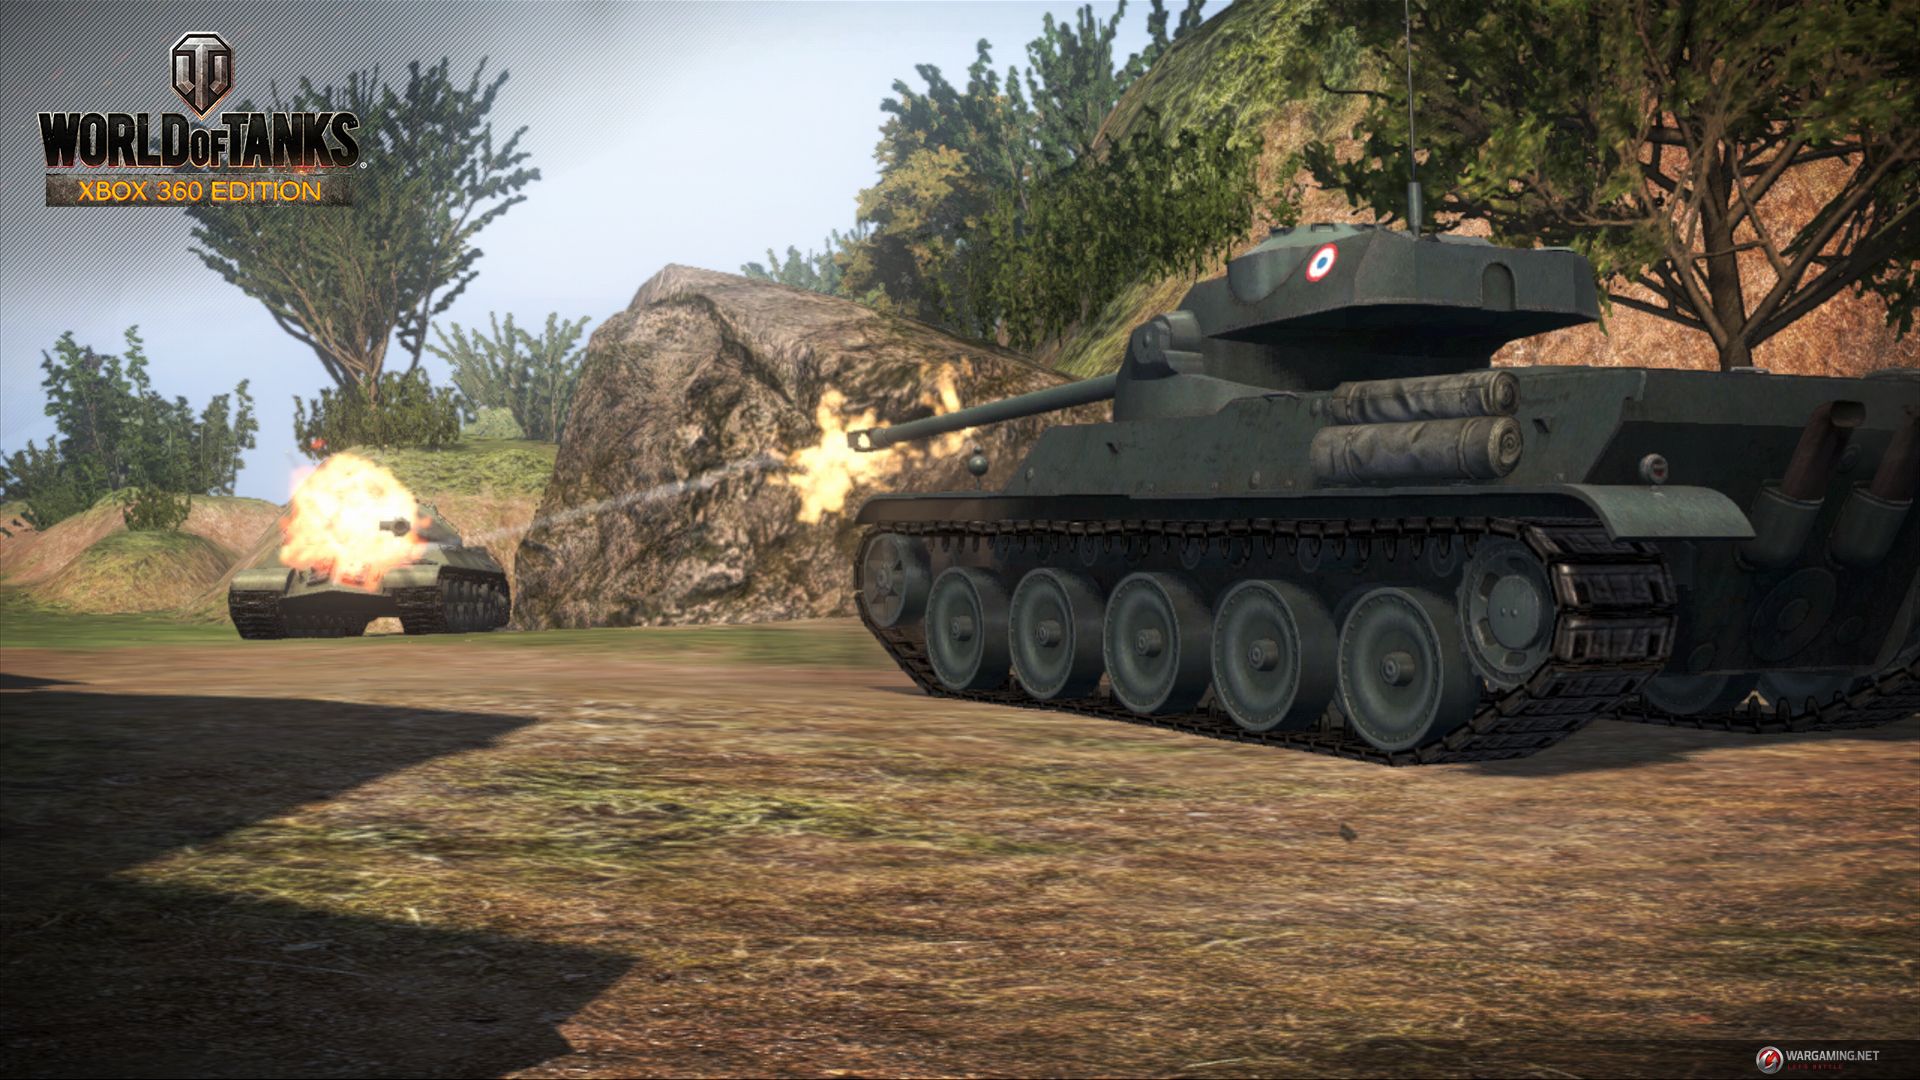 World of tanks 360. Ворлд оф танк на Xbox 360. Французские танки WOT. Ворд оф танк французские танки. Танки на Xbox 360.